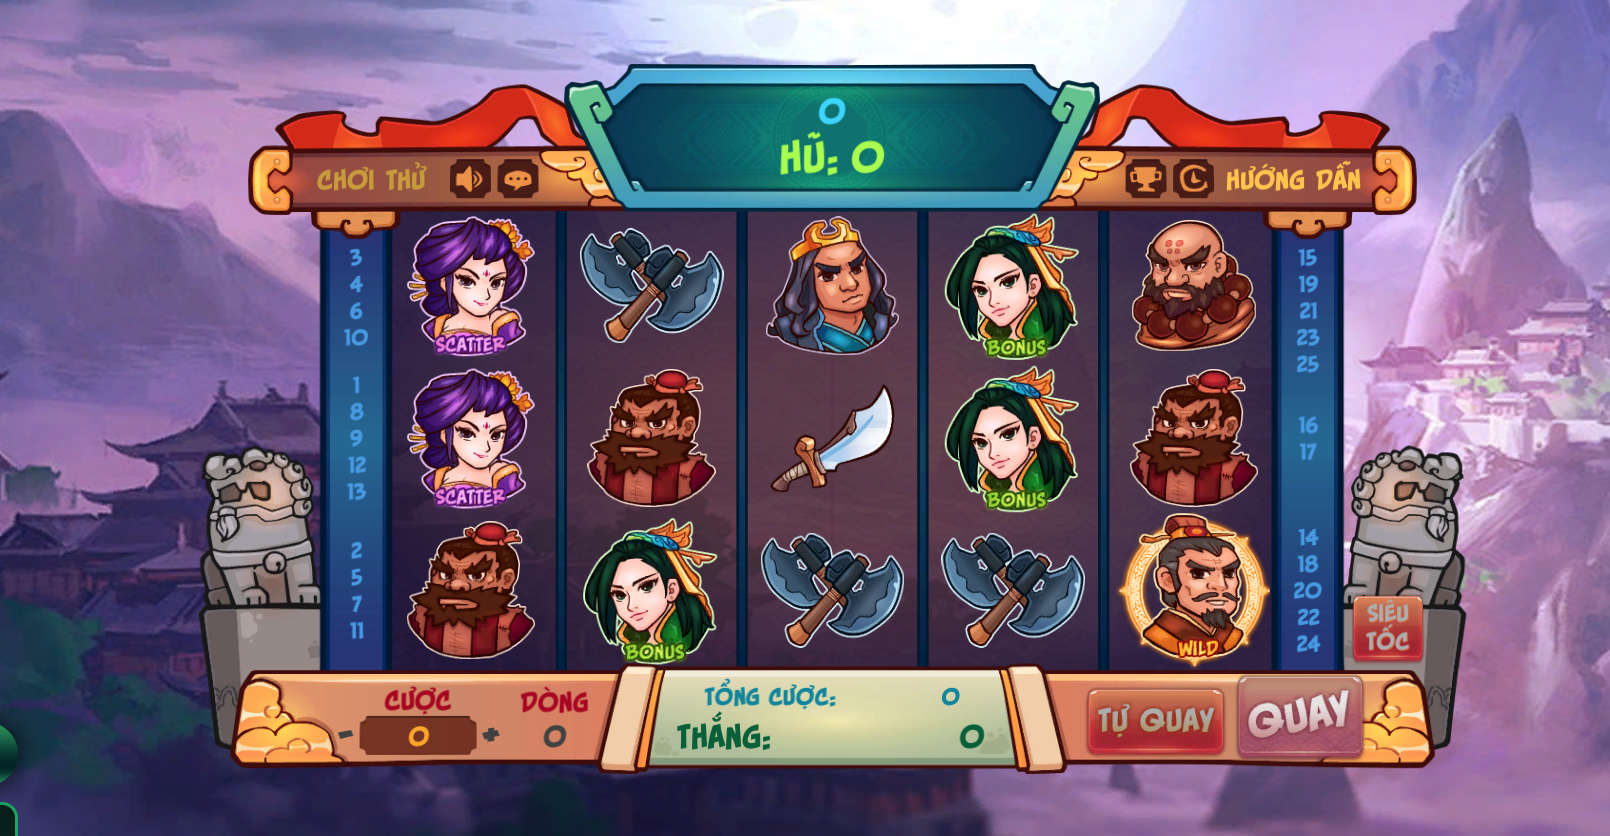 Đồ họa game Slot tại cổng game Kingfun